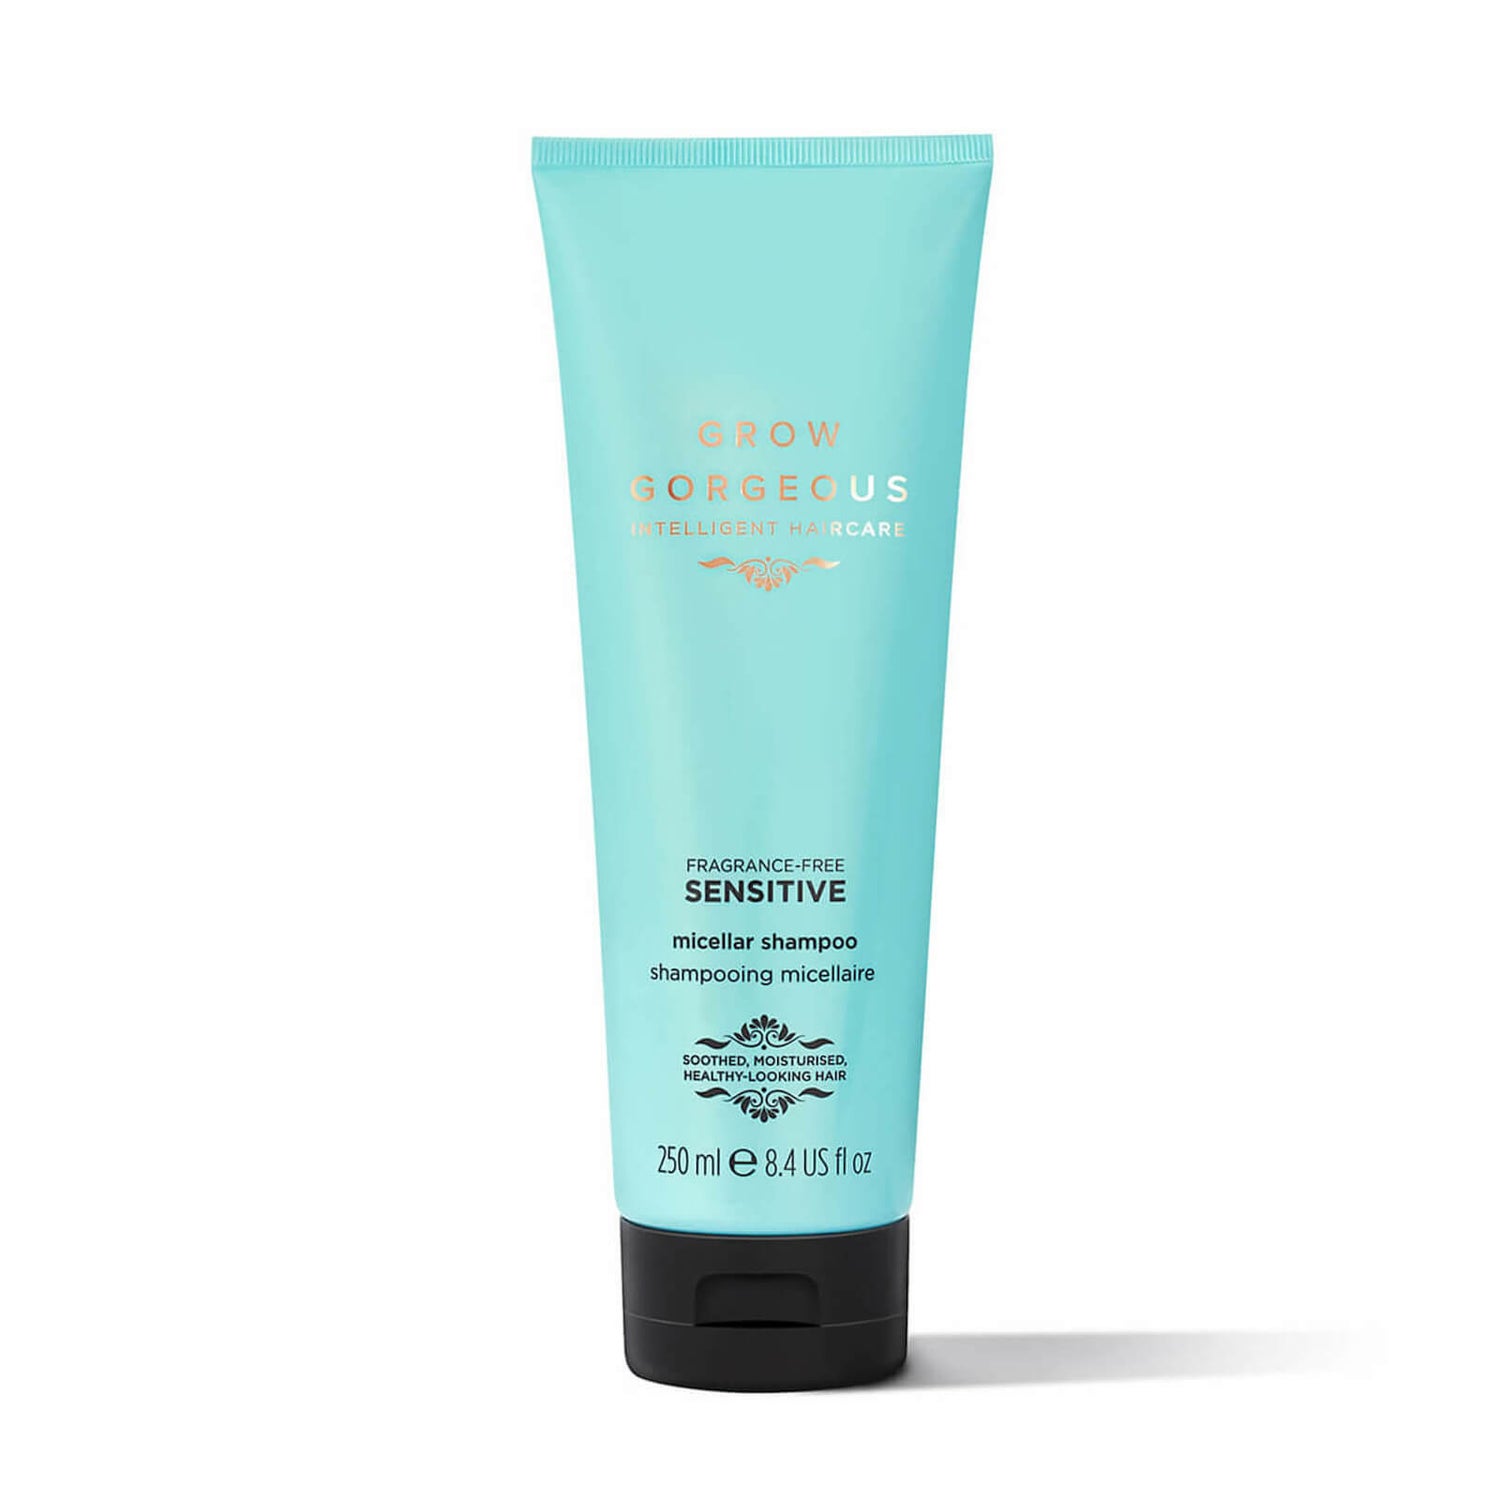 Grow Gorgeous Sensitive Micellar Shampoo 250ml